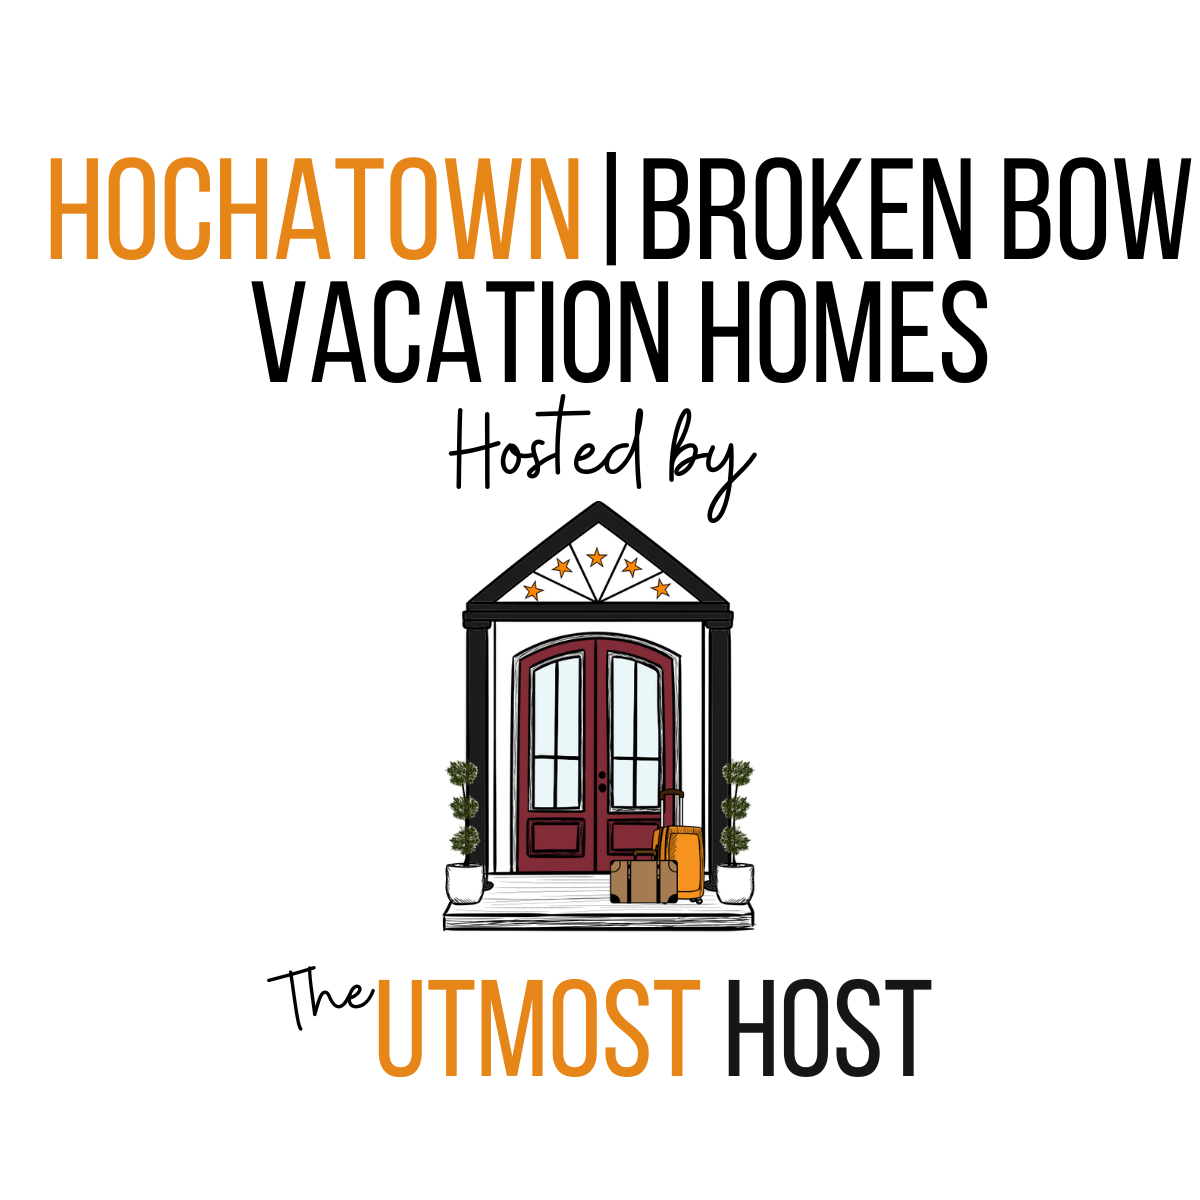 The Utmost Host - Hochatown Broken Bow Lake Oklahoma Vacation Rental Homes!